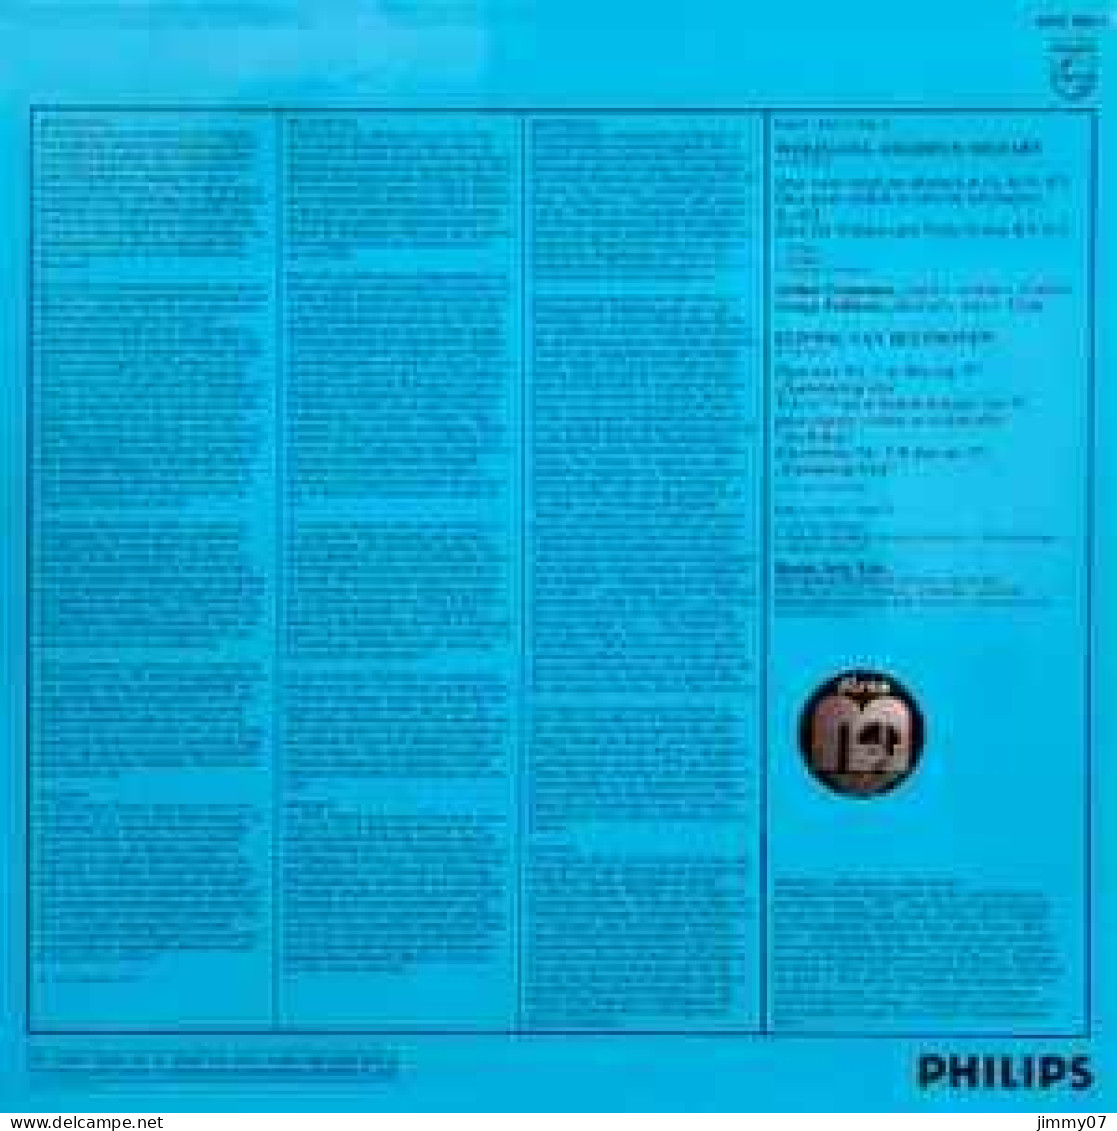 Louis Armstrong - Satchmo's Golden Favorites (LP, Comp, Rep) - Clásica